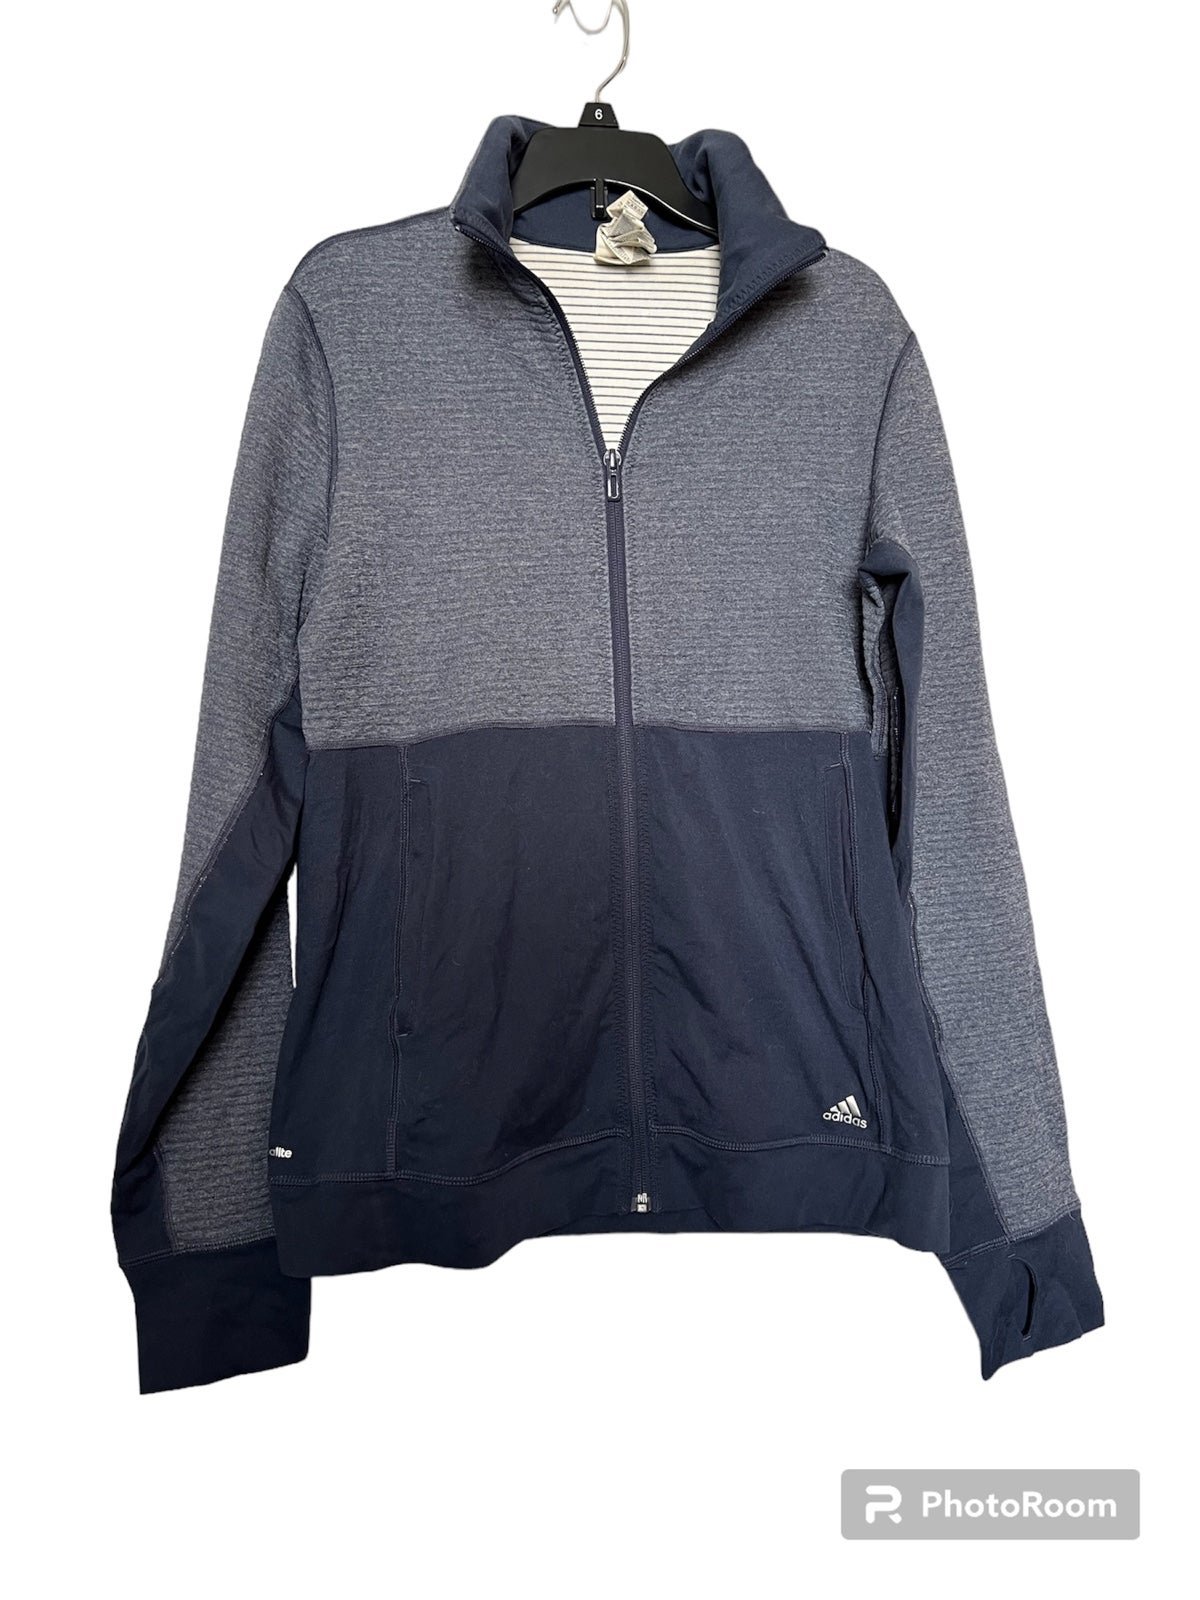 big discount Adidas Zip up jacket size S navy blue Gyat3zHDy Factory Price